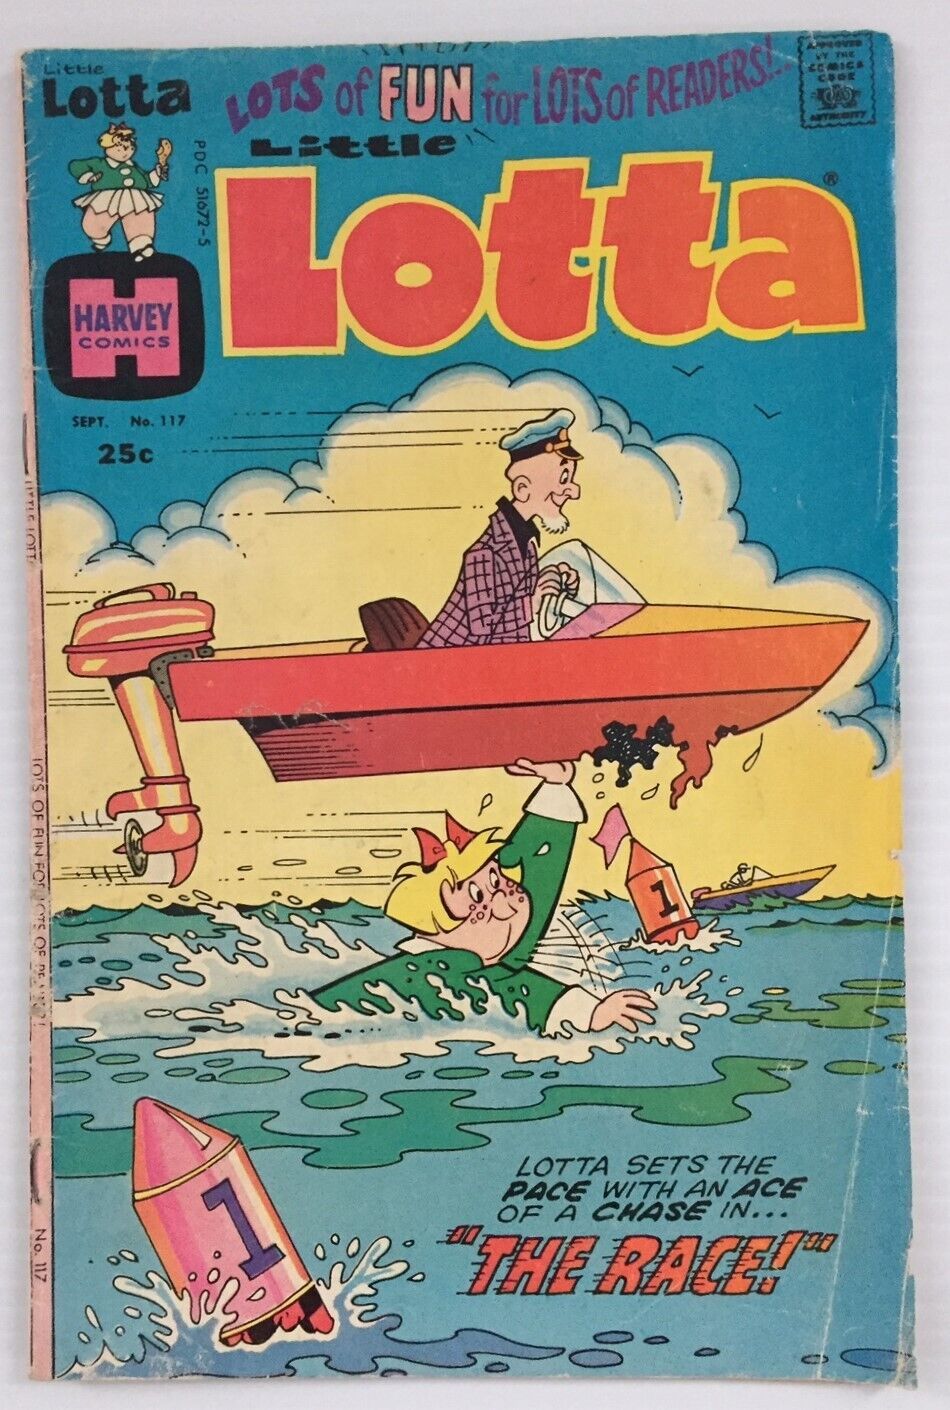 Little LOTTA #117 (1975) "THE RACE" HARVEY COMICS